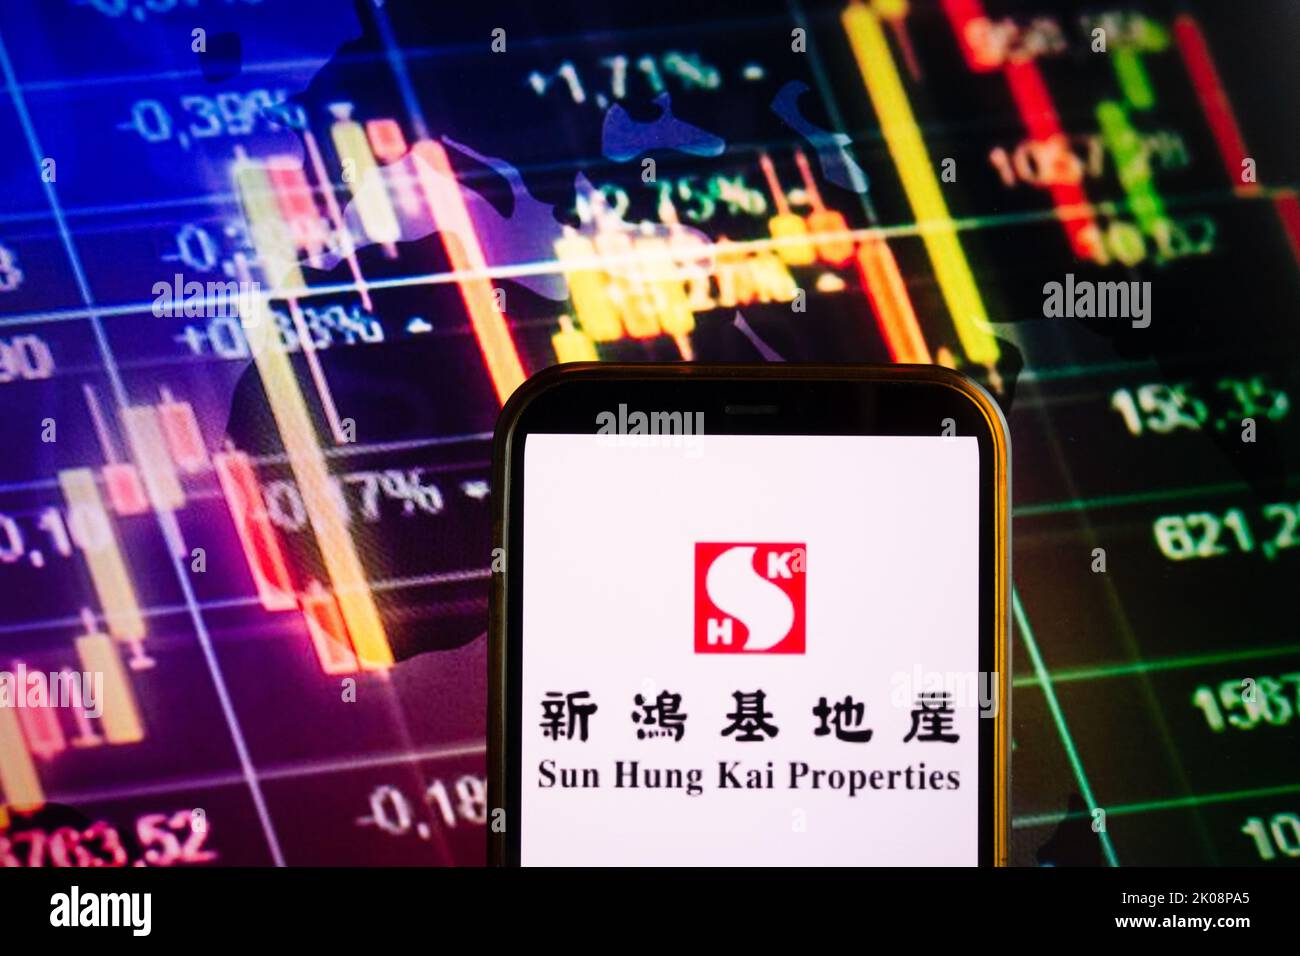 KONSKIE, POLAND - September 10, 2022: Smartphone displaying logo of Sun Hung Kai Properties company on stock exchange diagram background Stock Photo